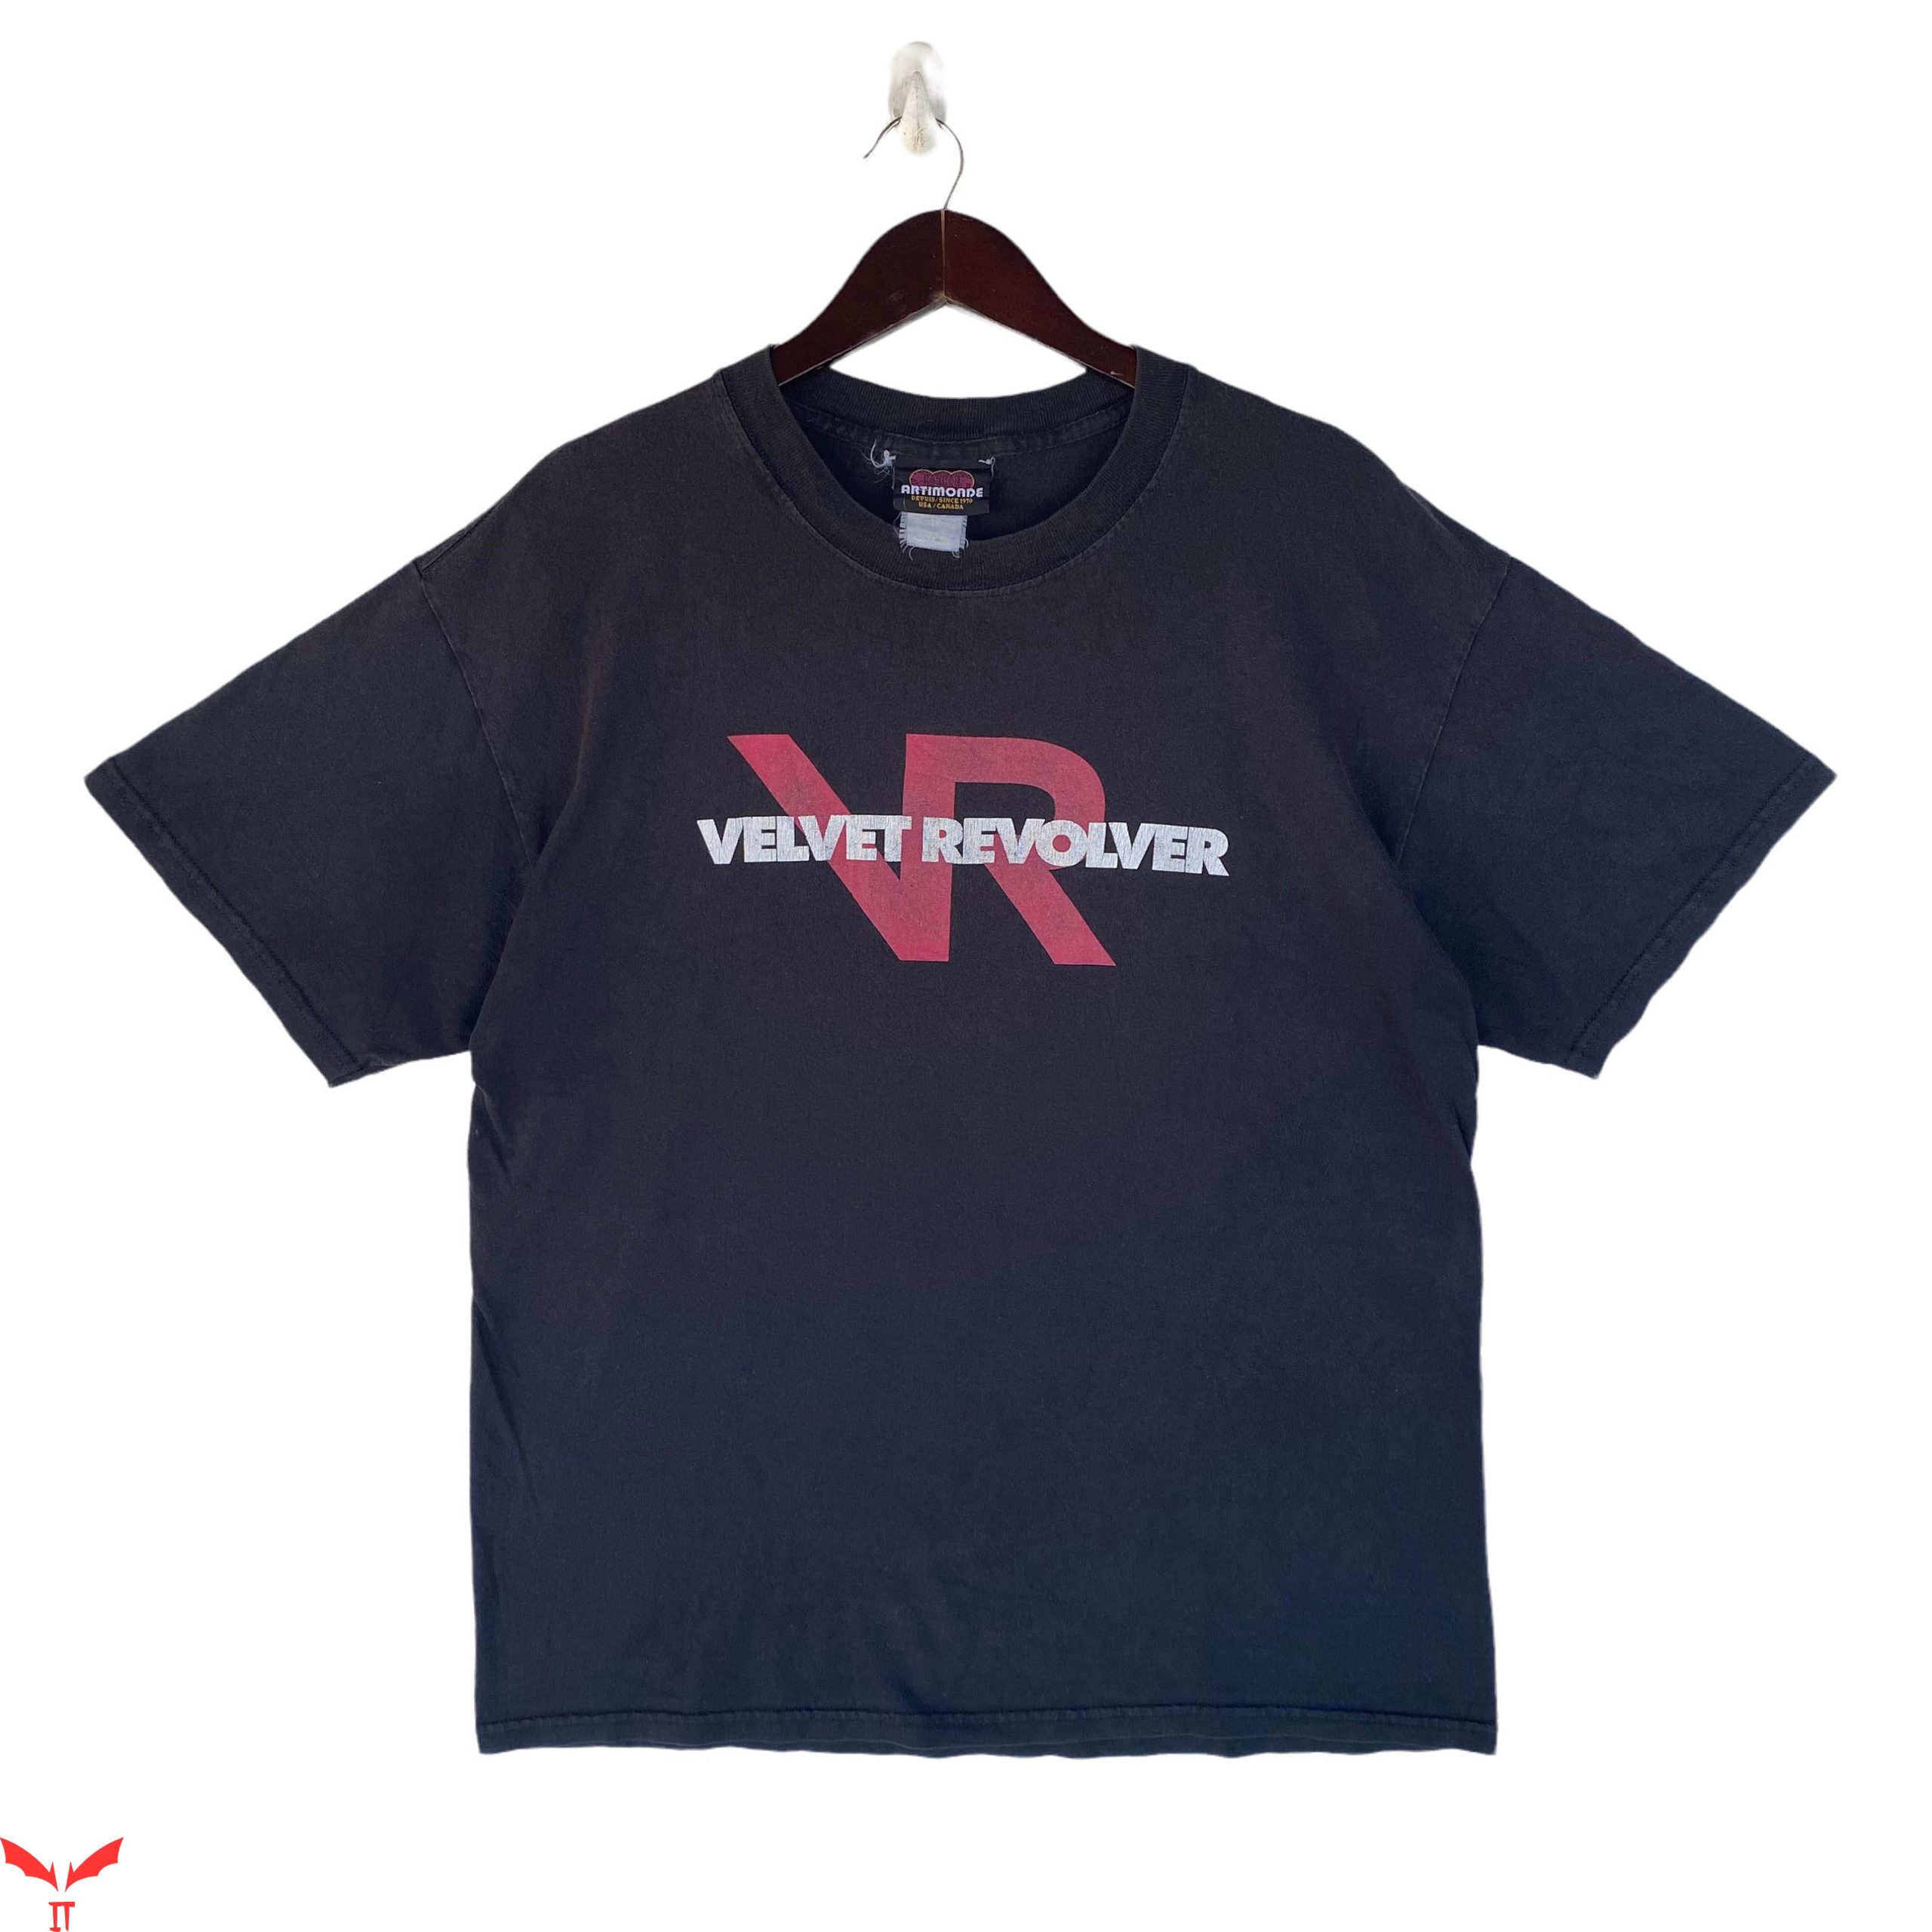 Velvet Revolver T-Shirt Vintage Hardrock Band Shirt